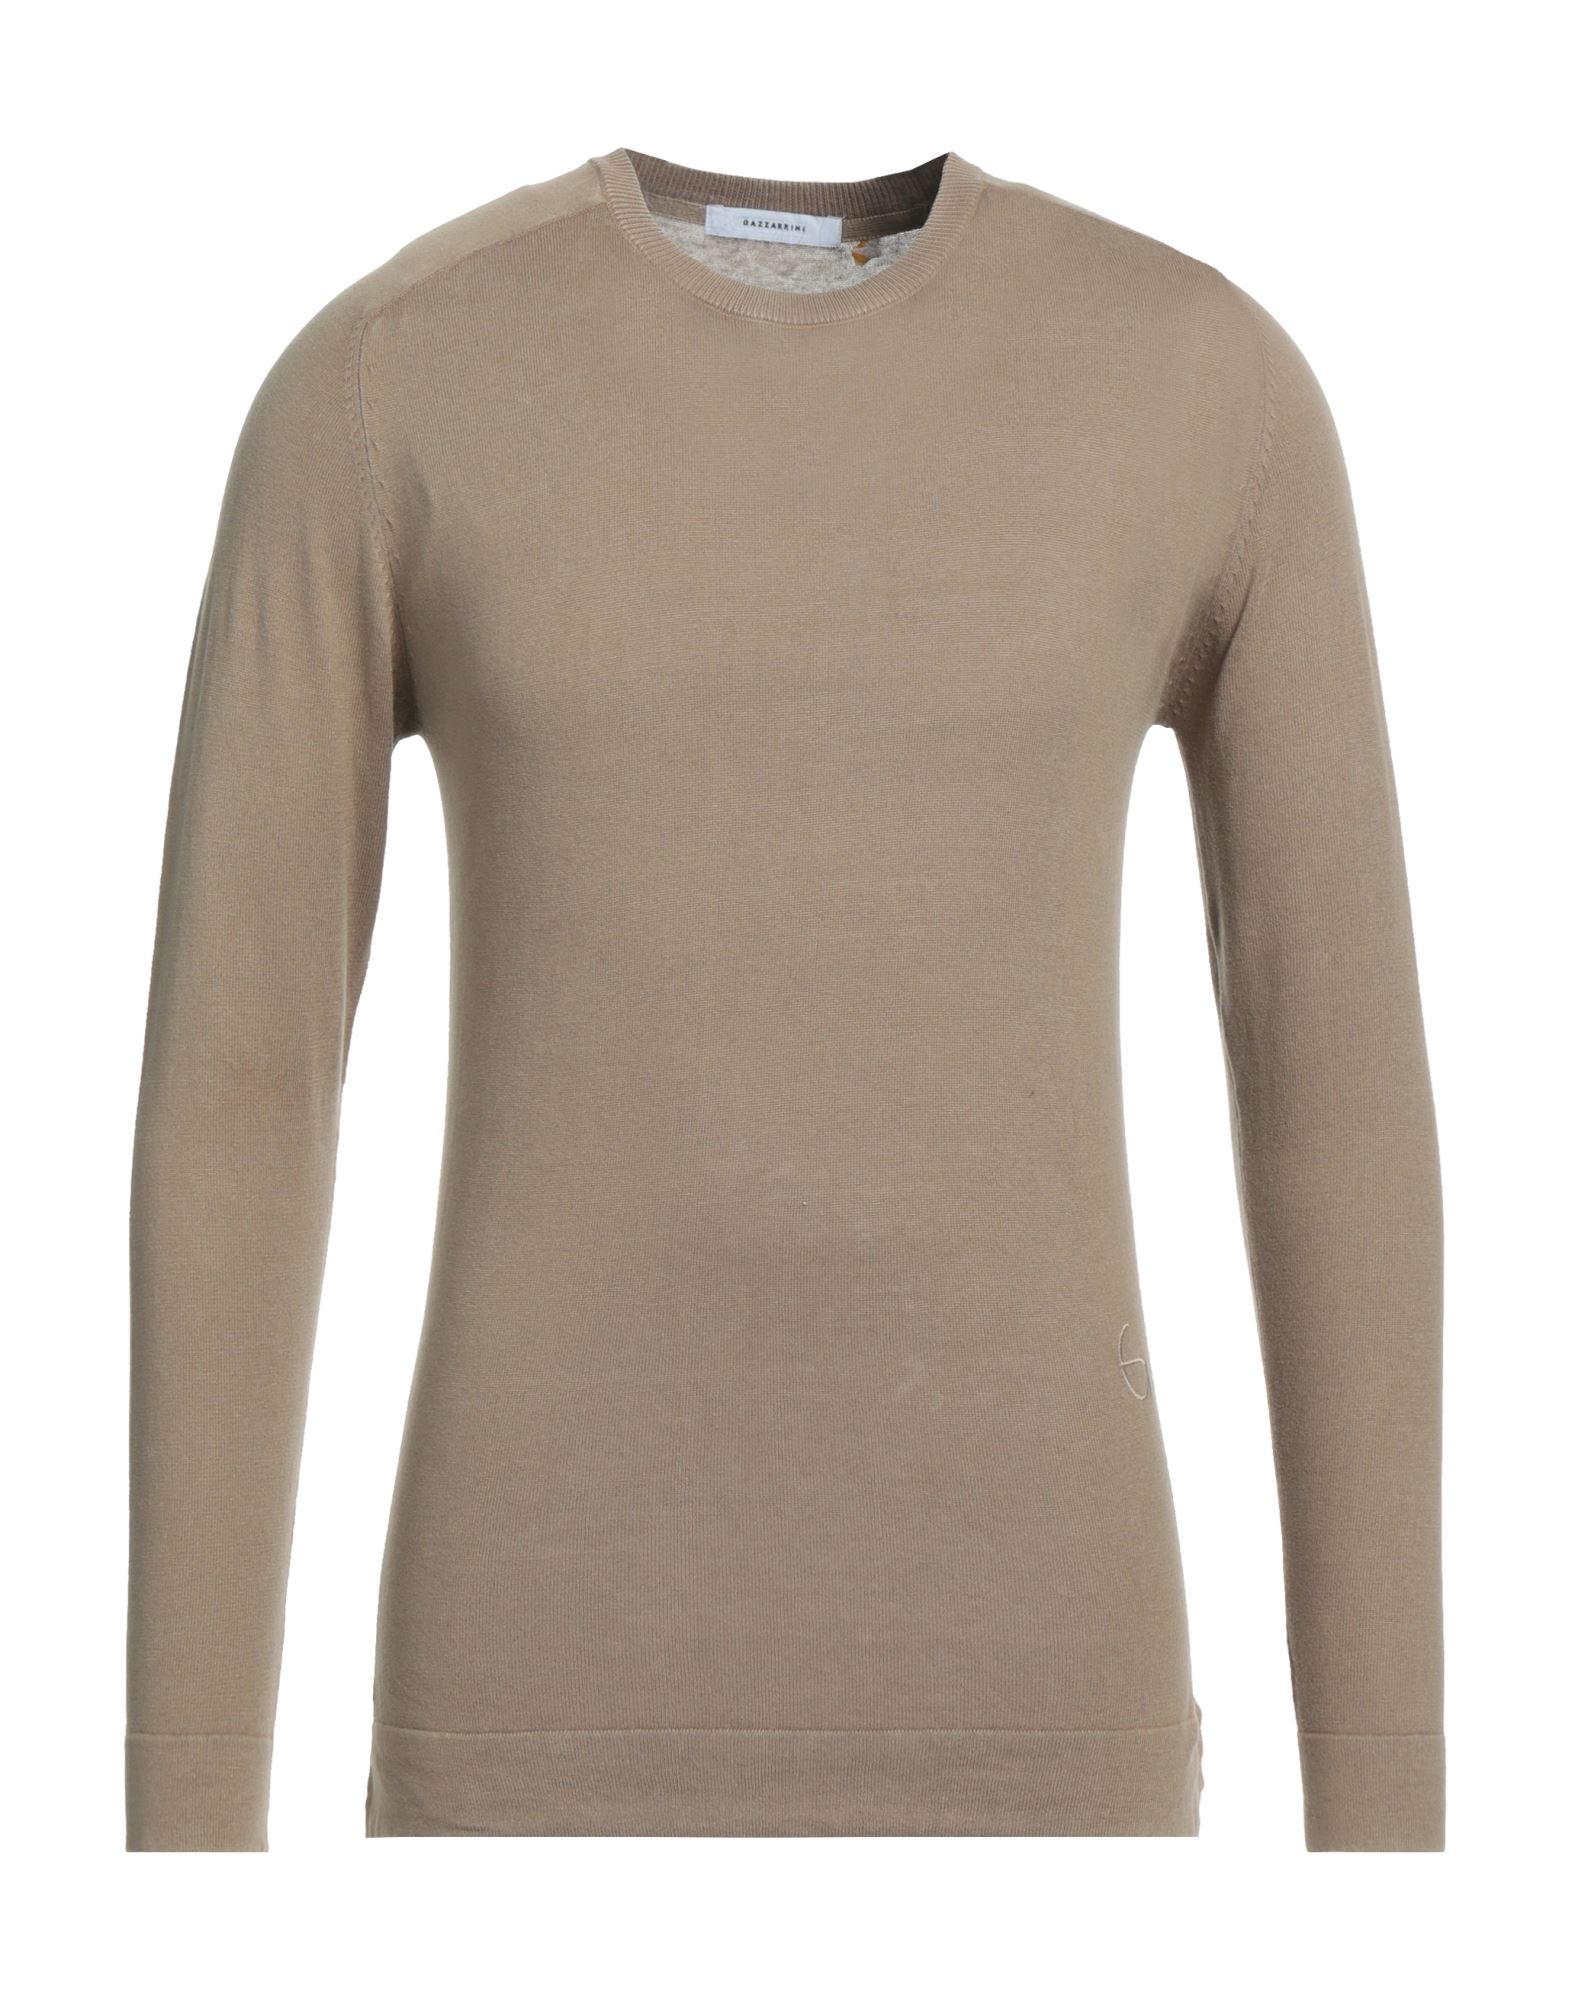 Gazzarrini Man Sweater Light Brown Size Xxl Cotton In Beige